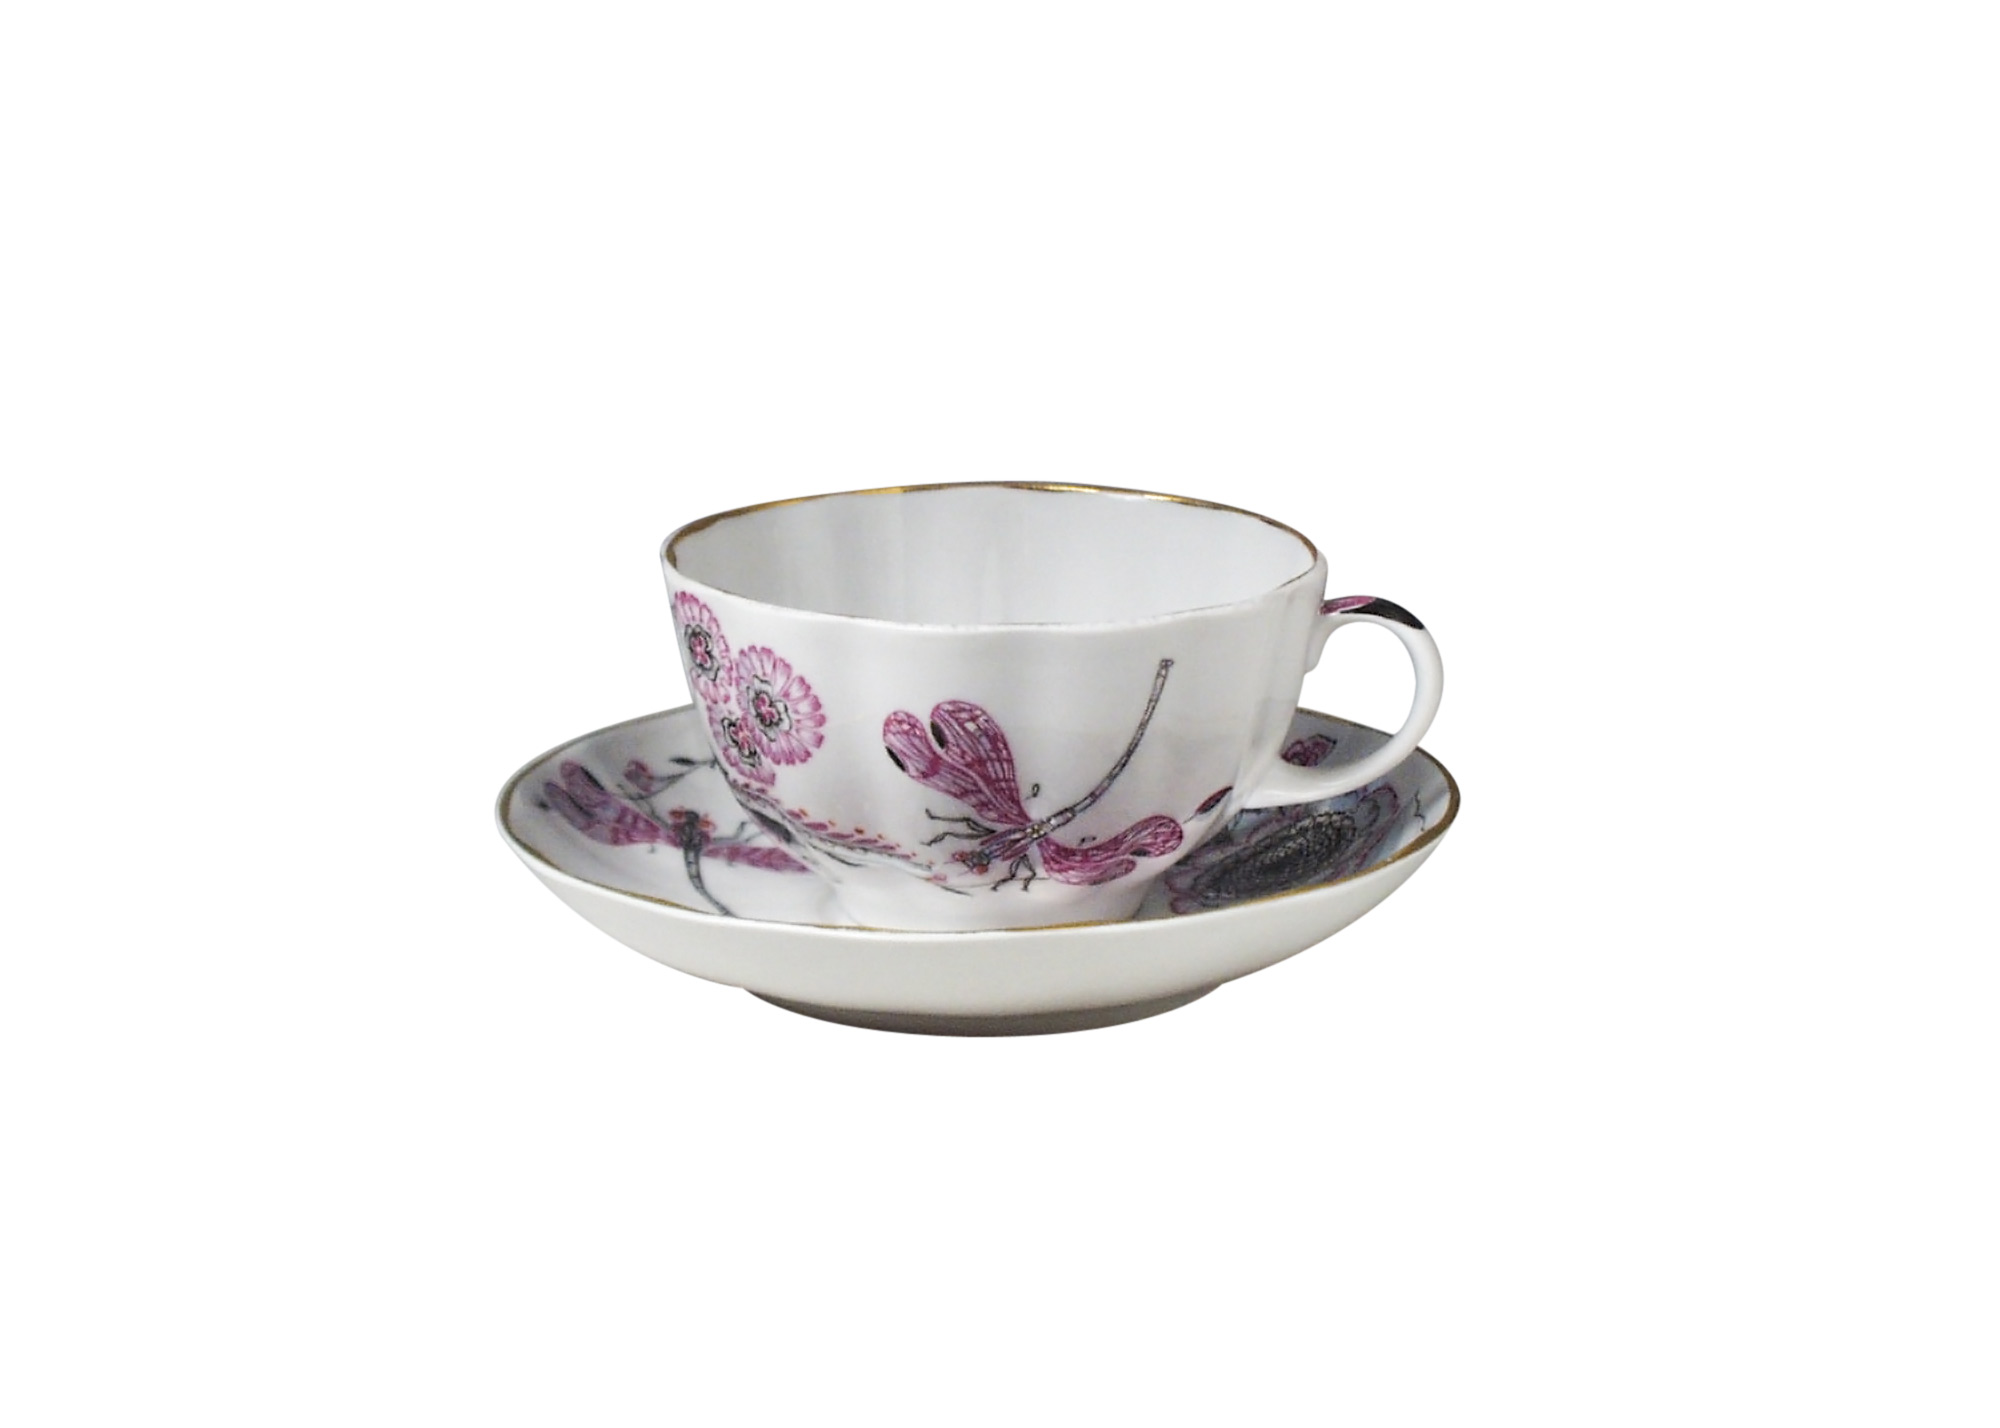 Buy Dragonfly Tea Cup and Saucer at GoldenCockerel.com